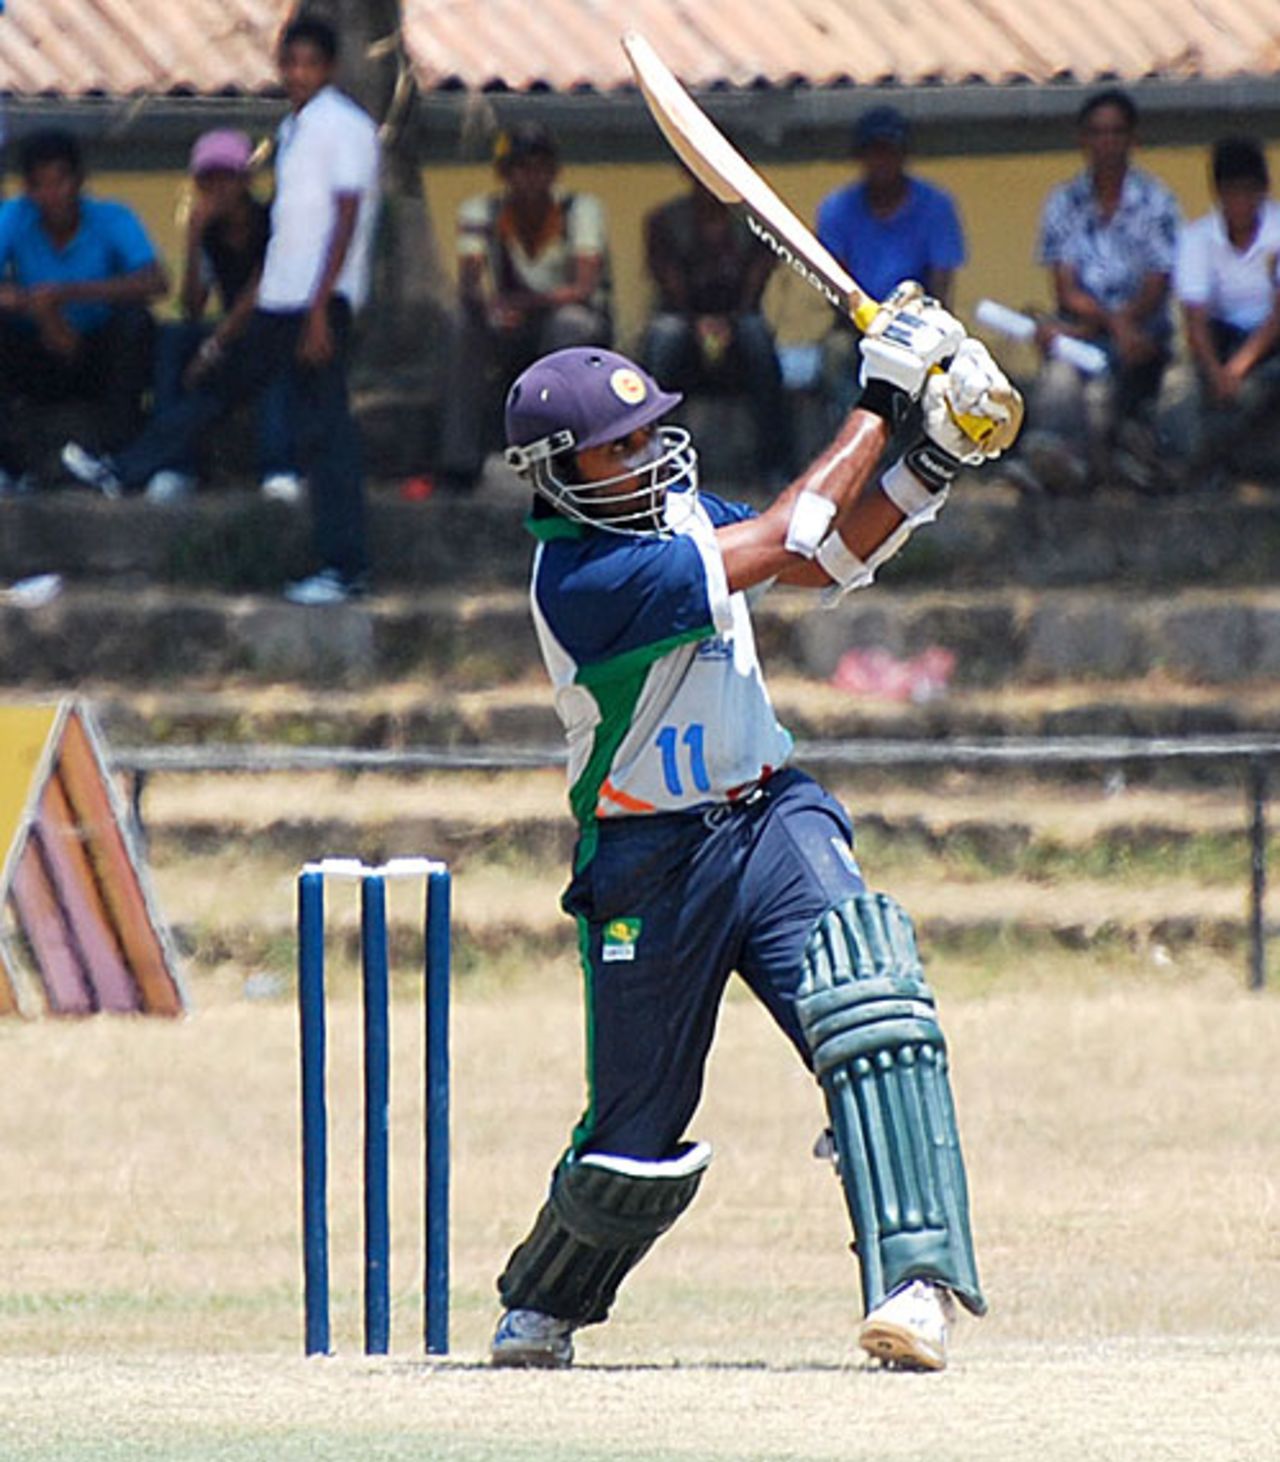 Mahela Jayawardene was the top scorer in the match with 59, Wayamba v Ruhuna, Sri Lanka Cricket Inter-Provincial Twenty20 Tournament, Kurunegala, February 27, 2010